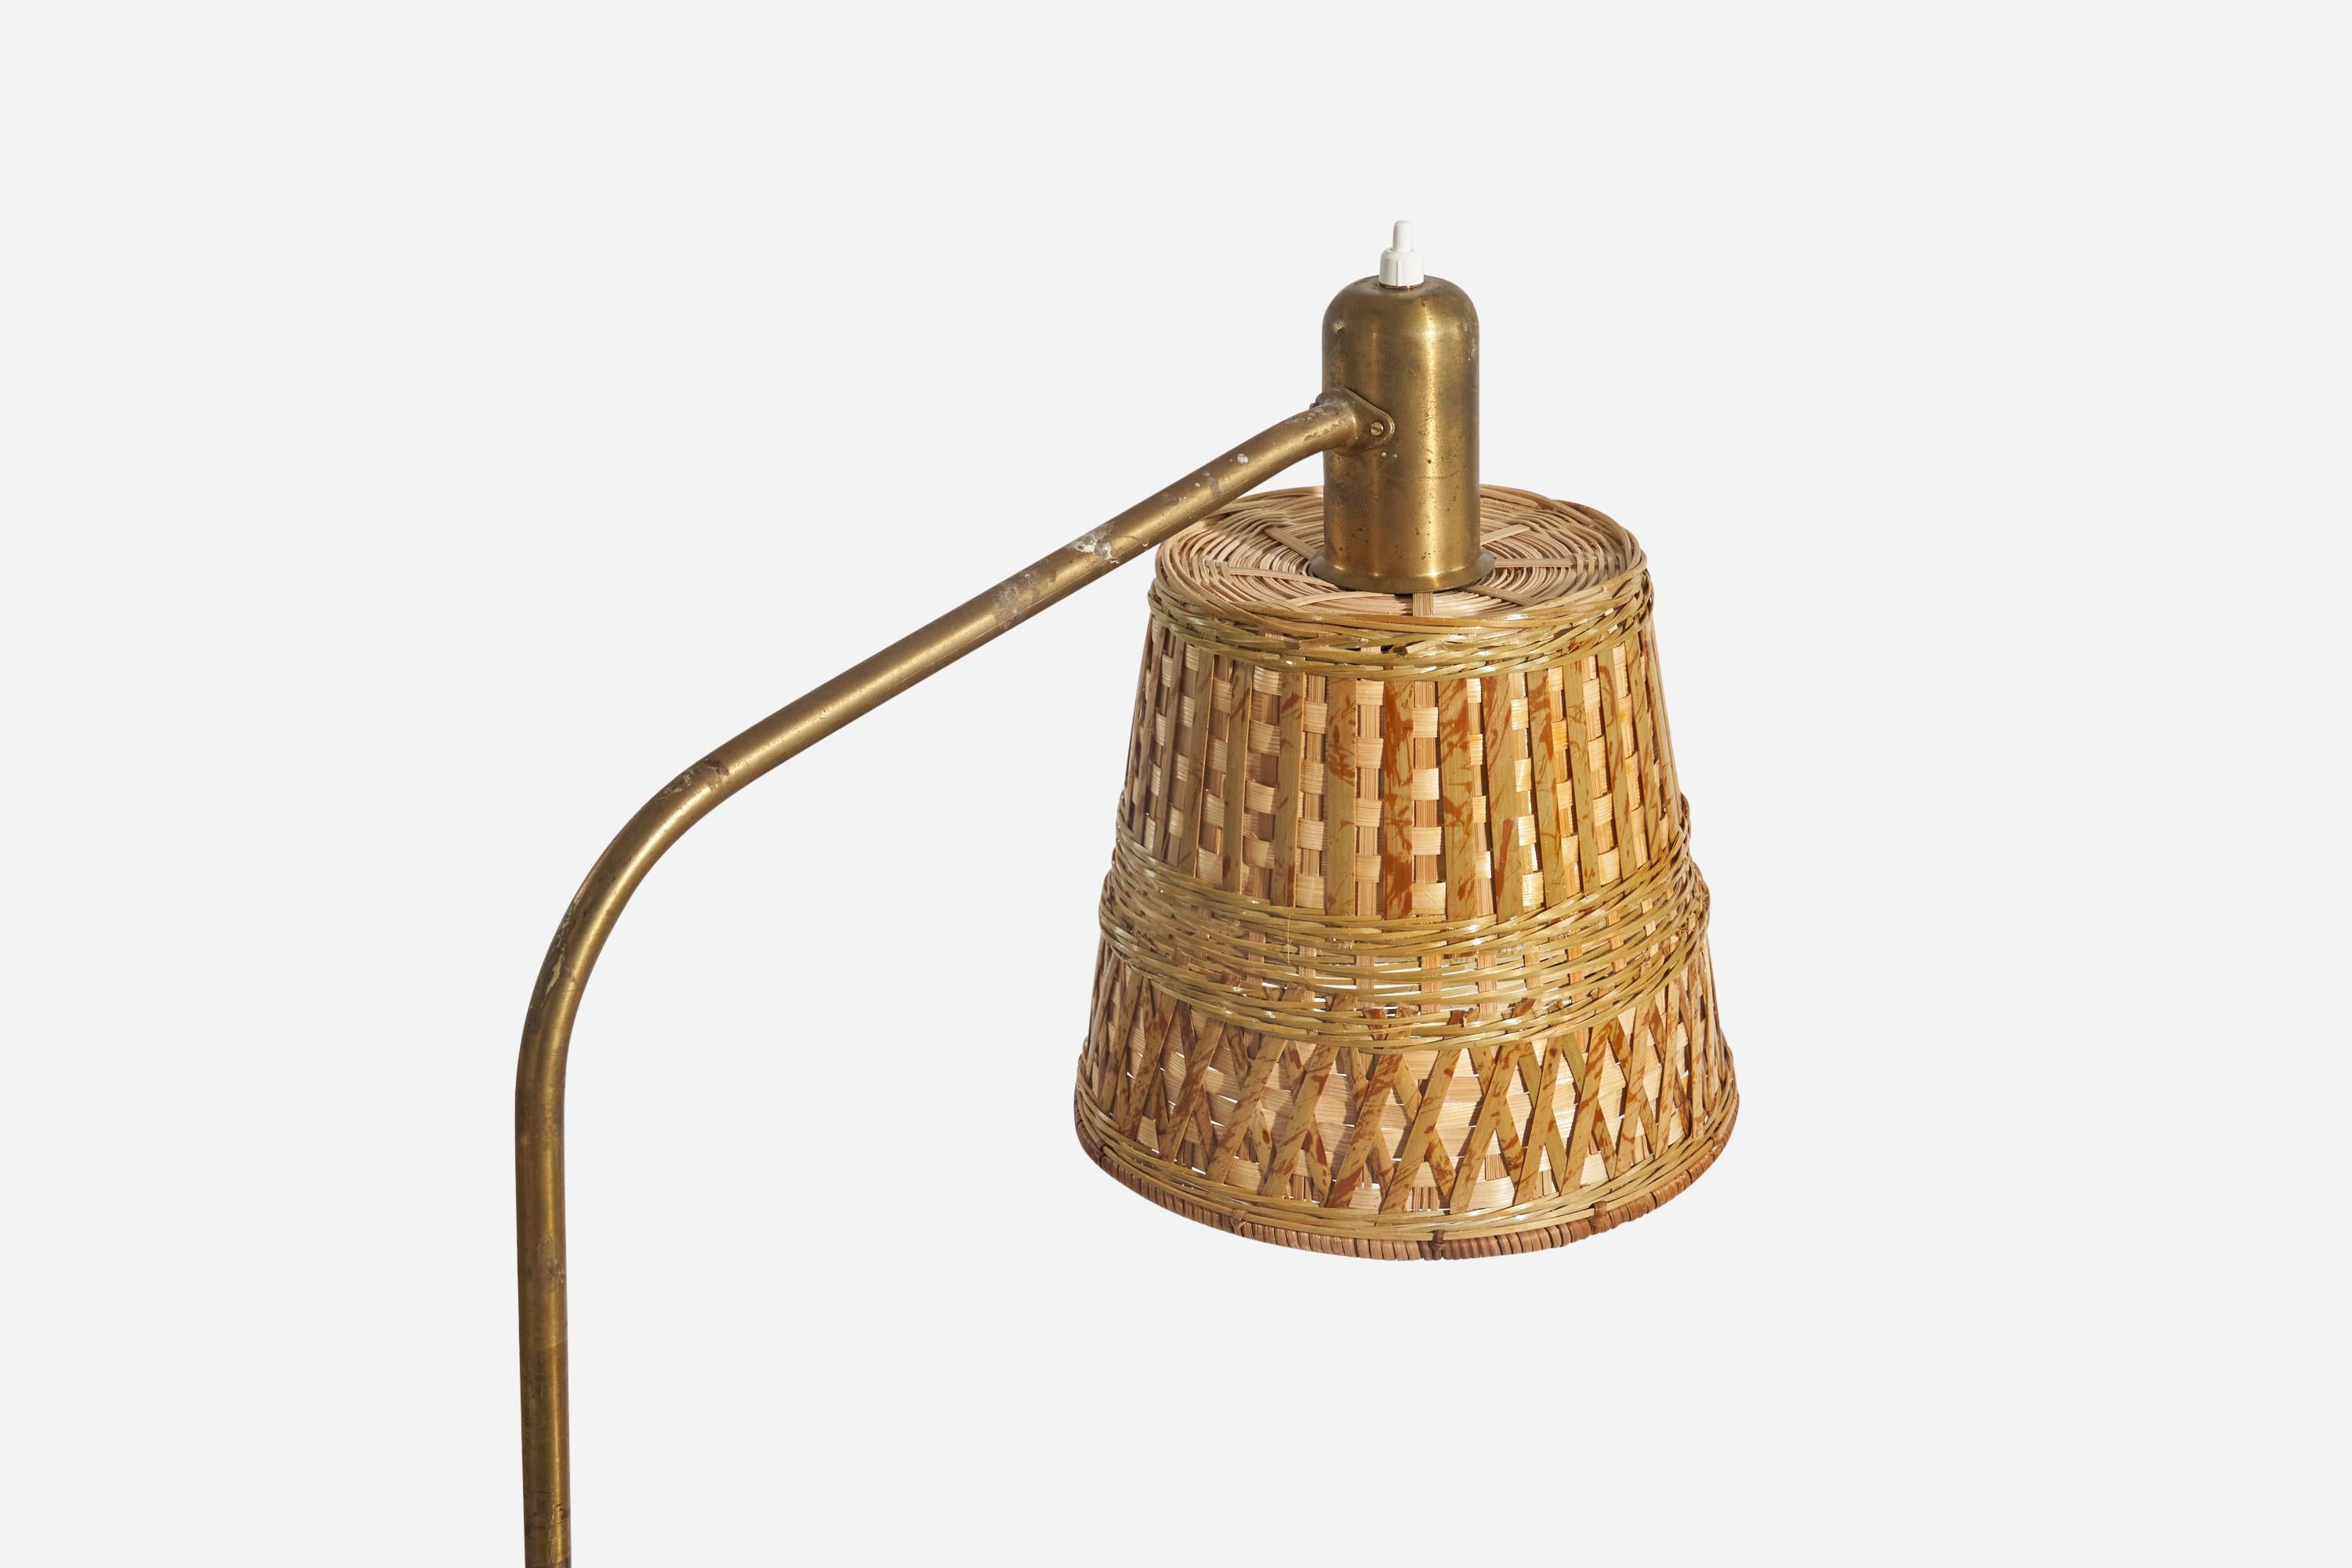 Scandinavian Modern Hans Bergström, Floor Lamp, Brass, Rattan, ASEA, Sweden, 1940s For Sale